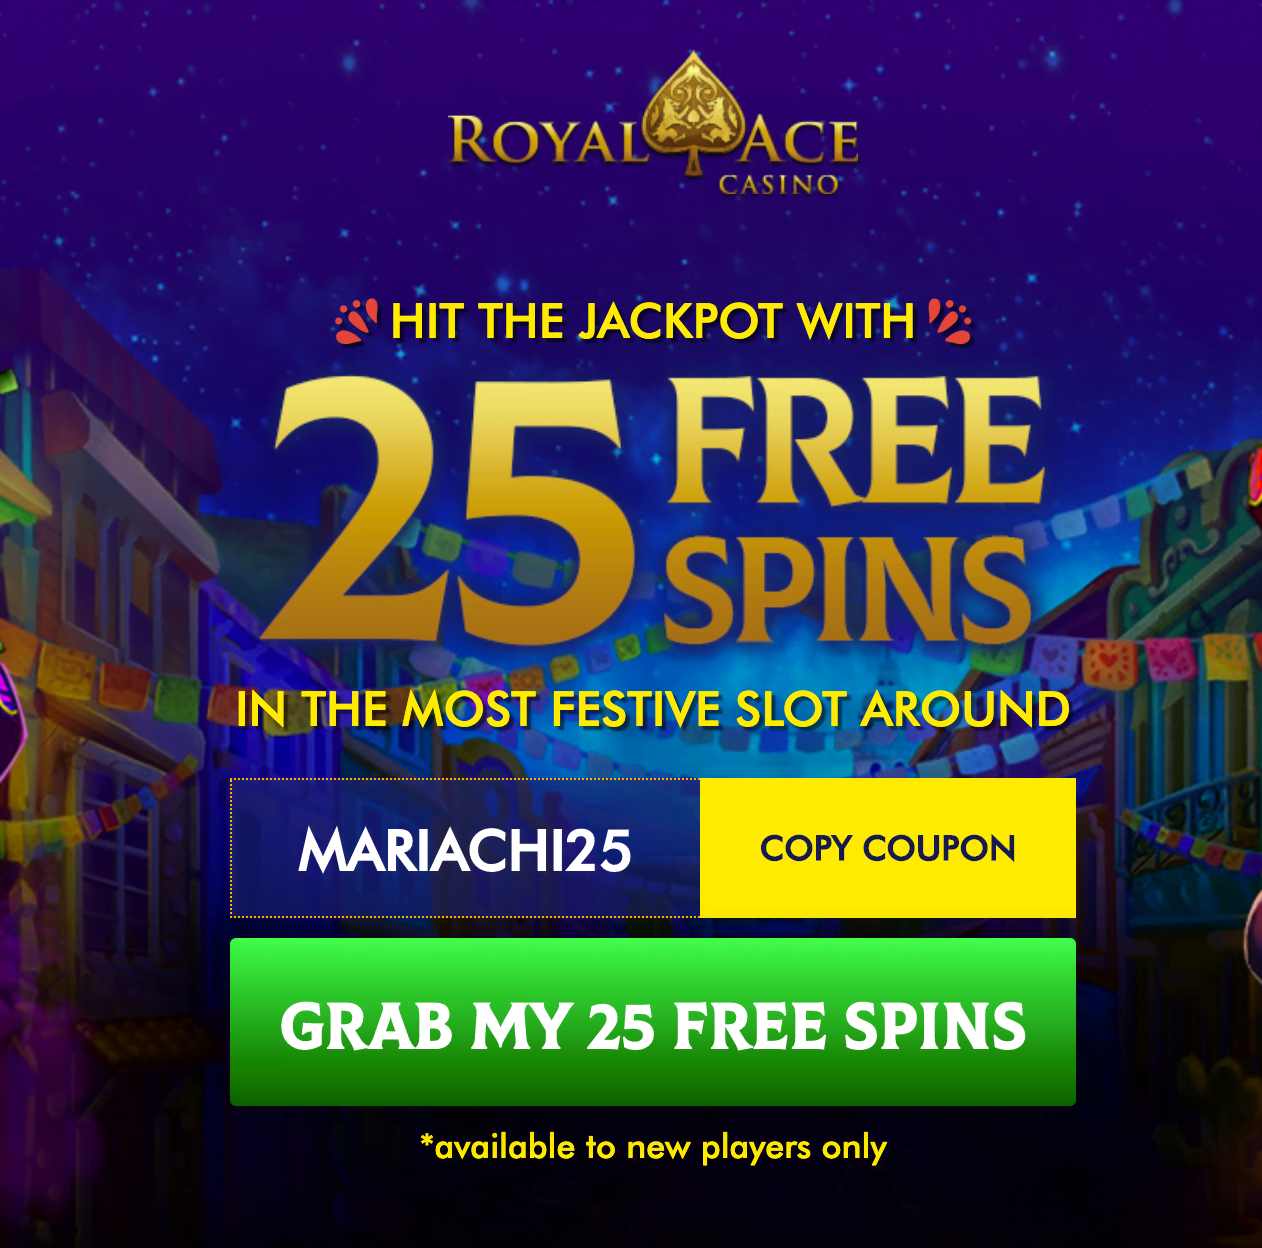 No deposit bonus codes for royal ace casino 2021